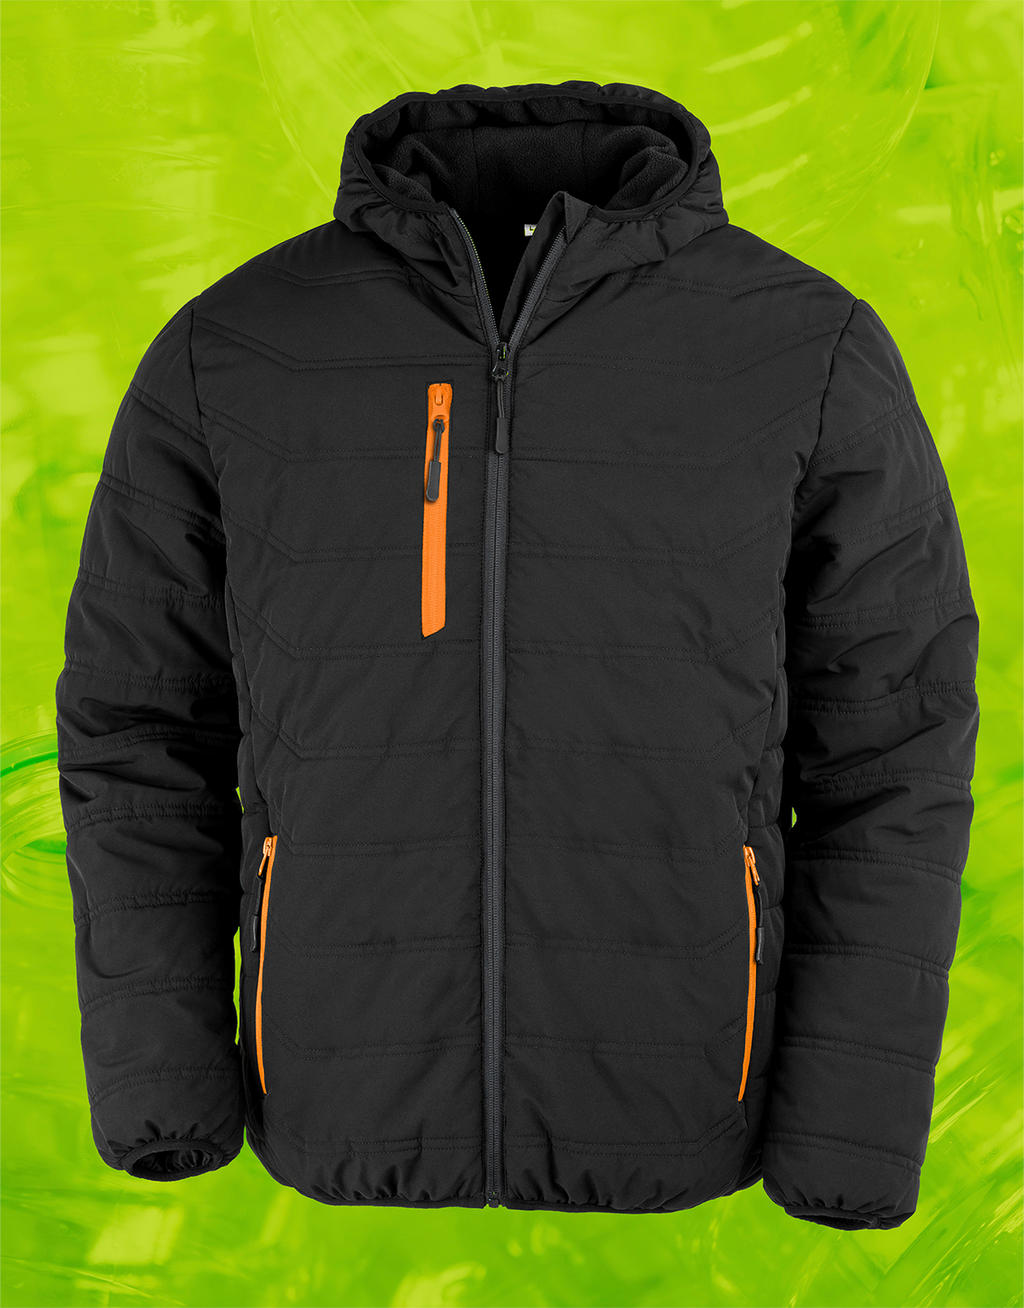  Black Compass Padded Winter Jacket in Farbe Black/Orange